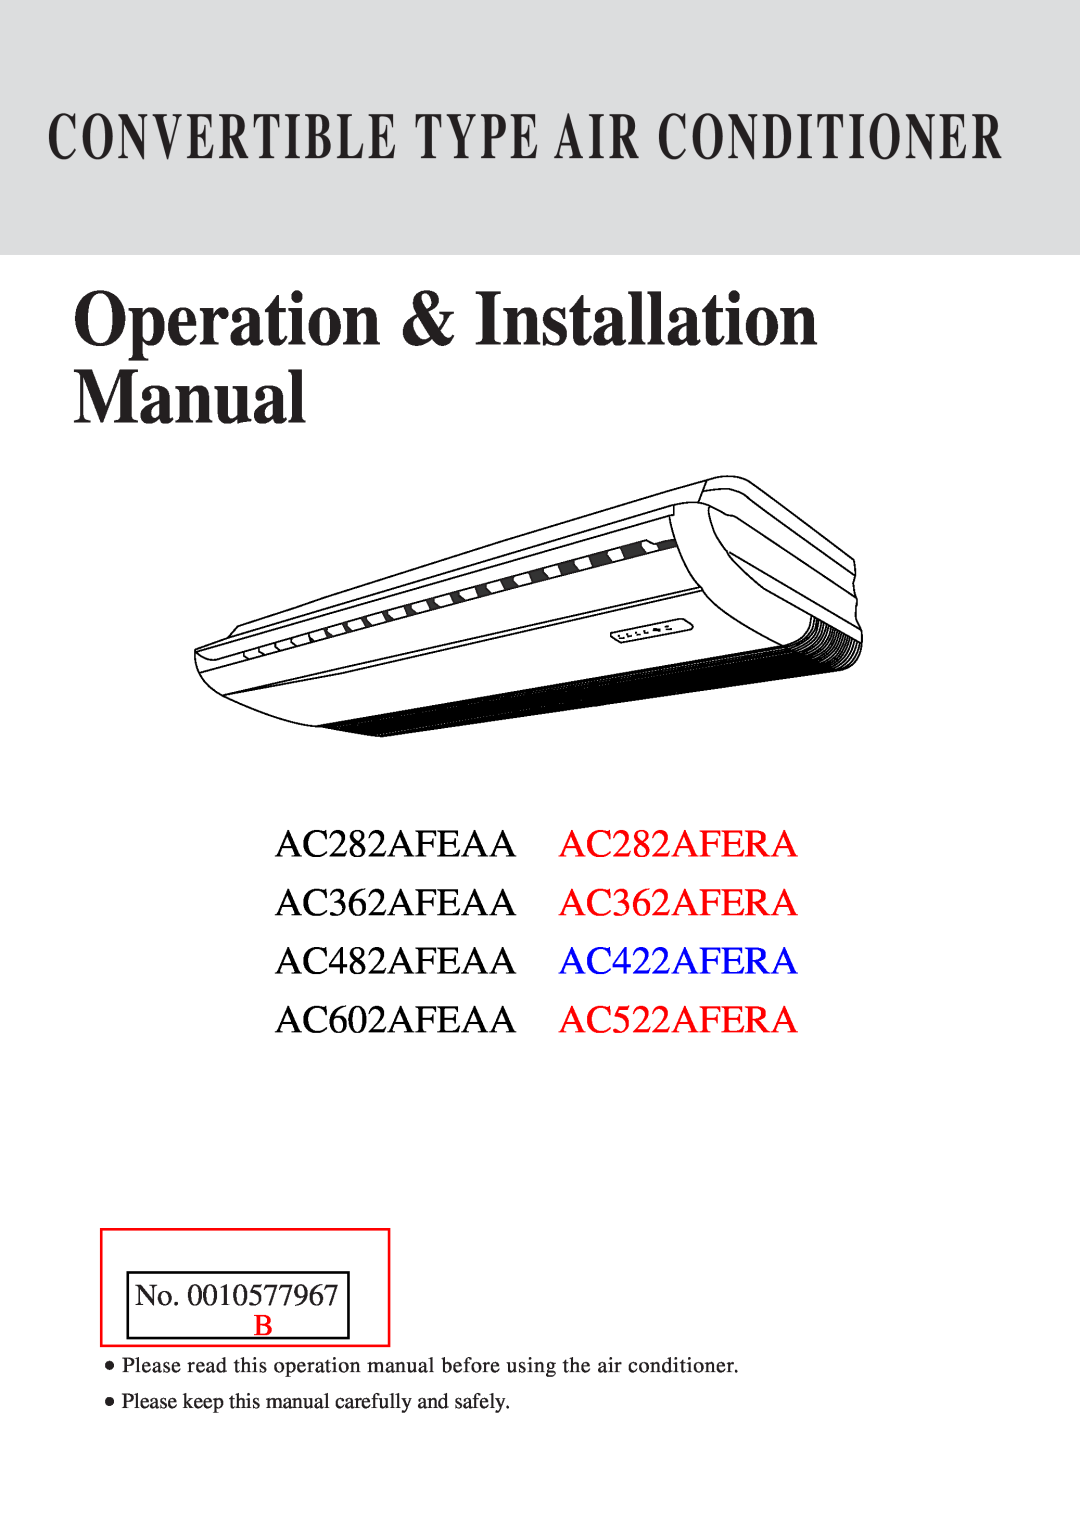 Haier AC422AFERA installation manual Operation & Installation Manual, Convertible Type Air Conditioner 